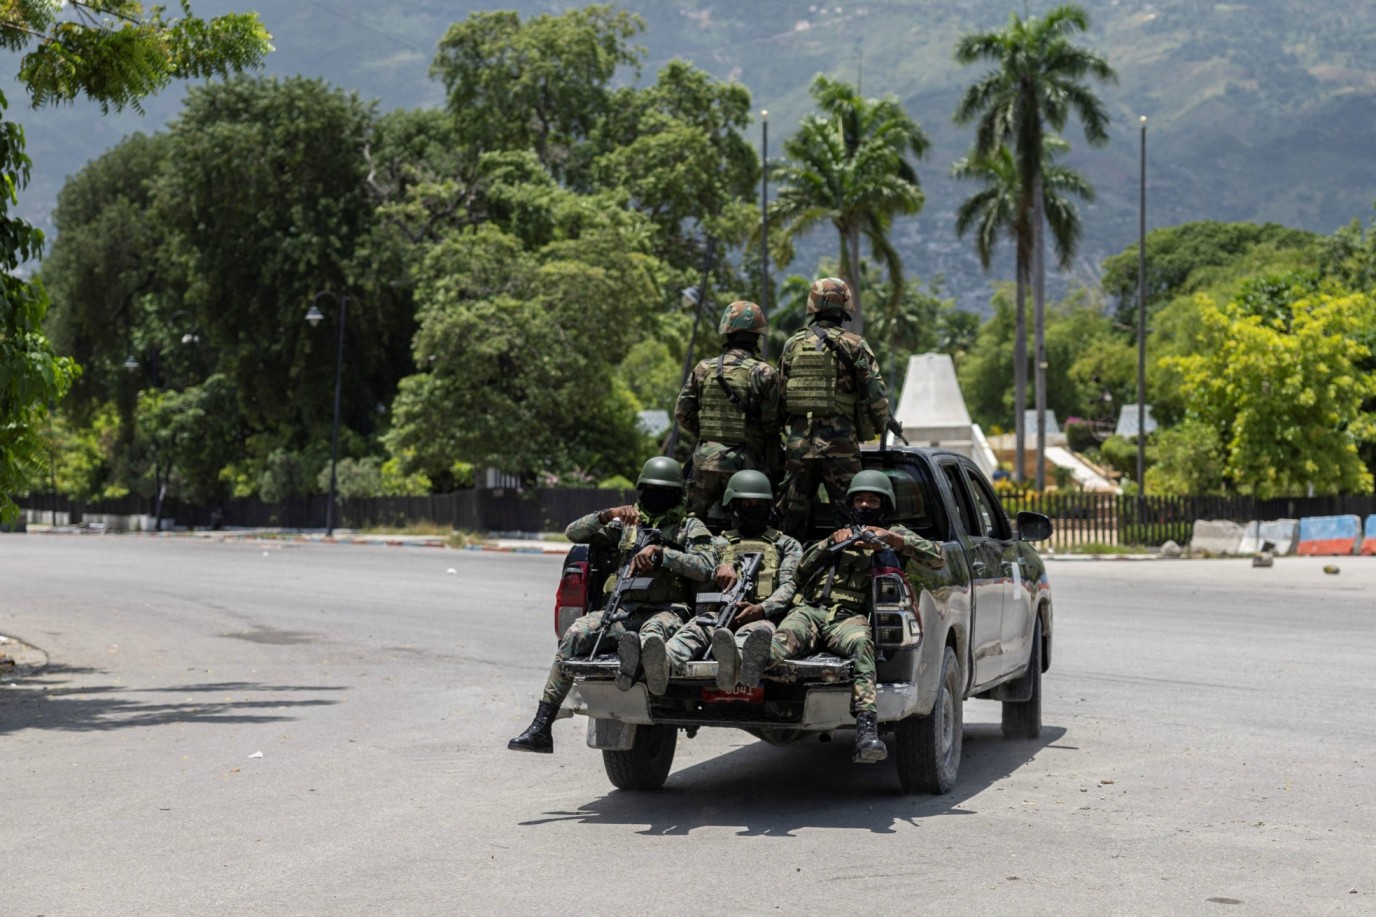 Haiti police regain control of station seized by gangs